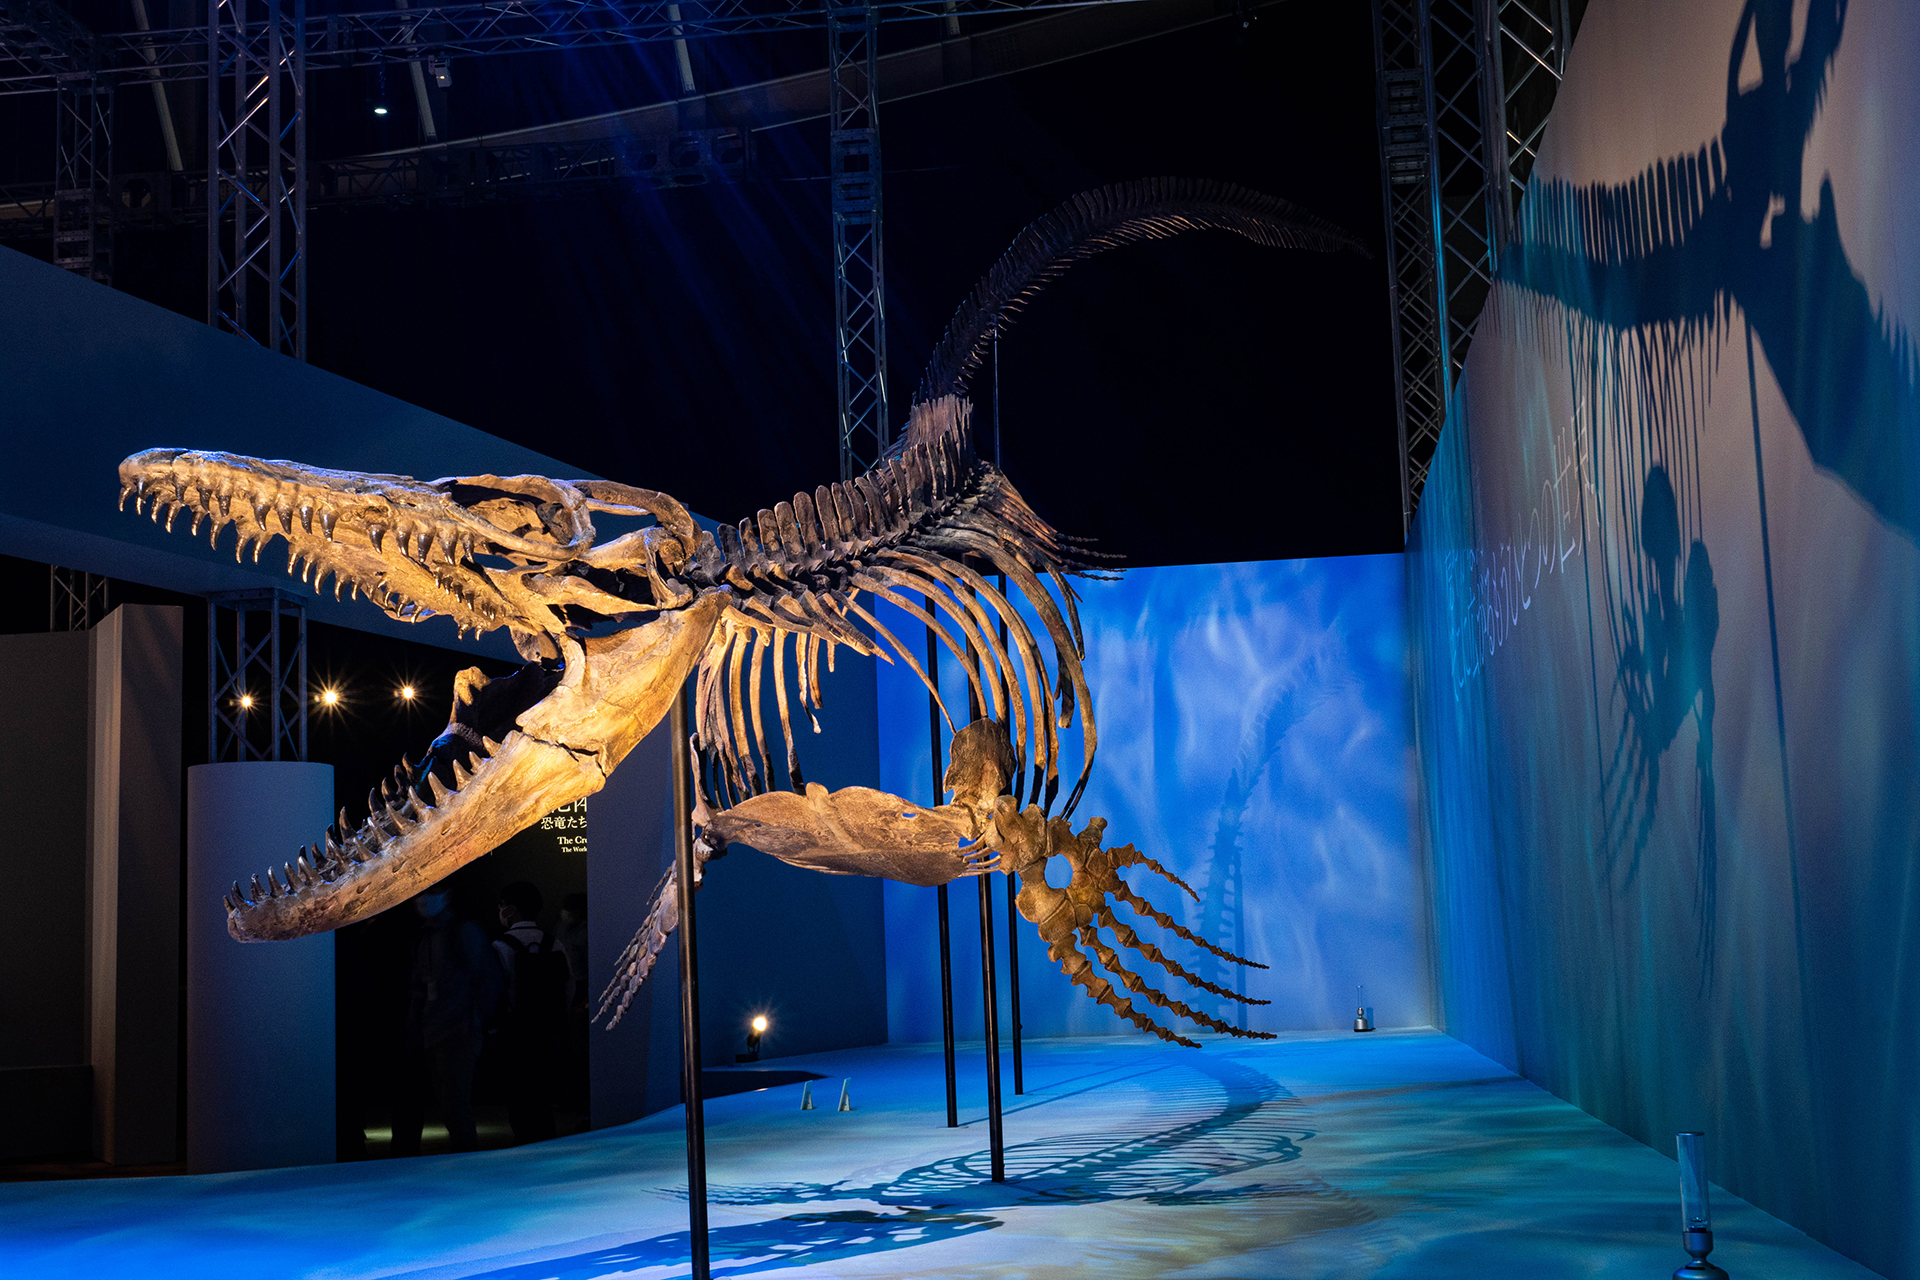 『DinoScience 恐竜科学博』 今年の夏休みは横浜へ! 全身骨格展示が多数ある話題の恐竜展を見に行こう♪ | 関東のお出かけ情報ならオソトイコ